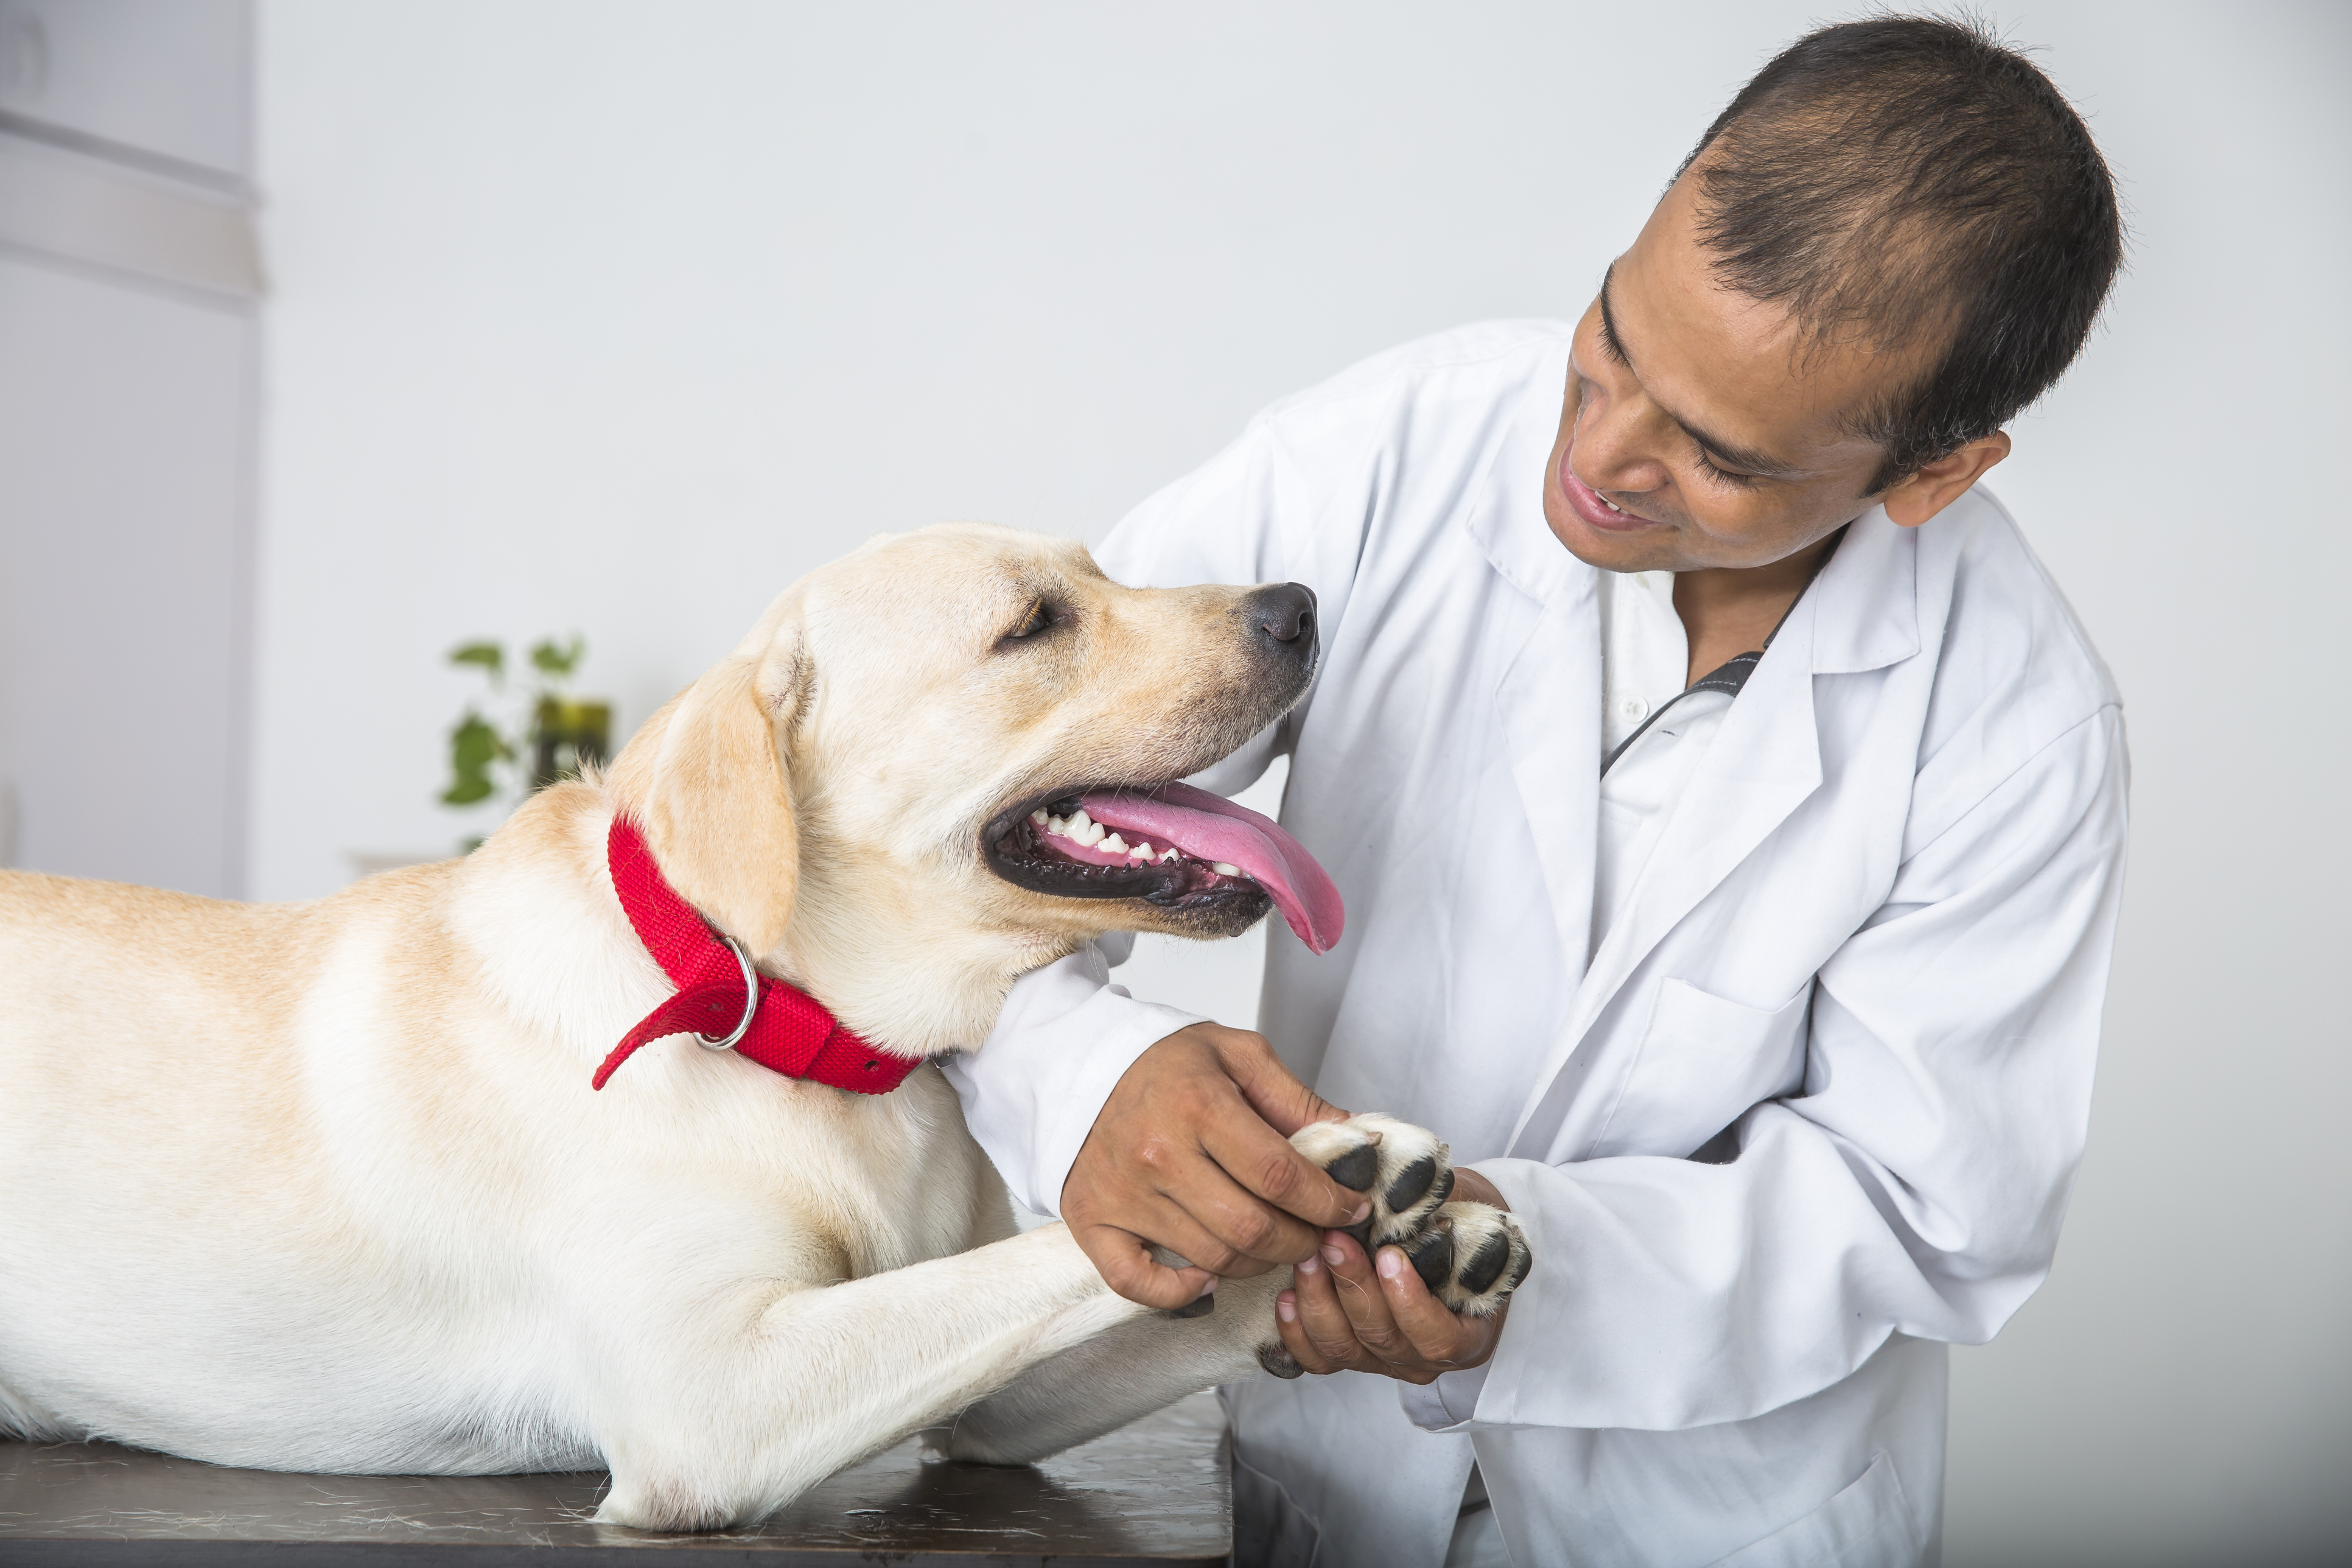 Friendly Labrador Retriever pants and smiles while vet examines his paws.